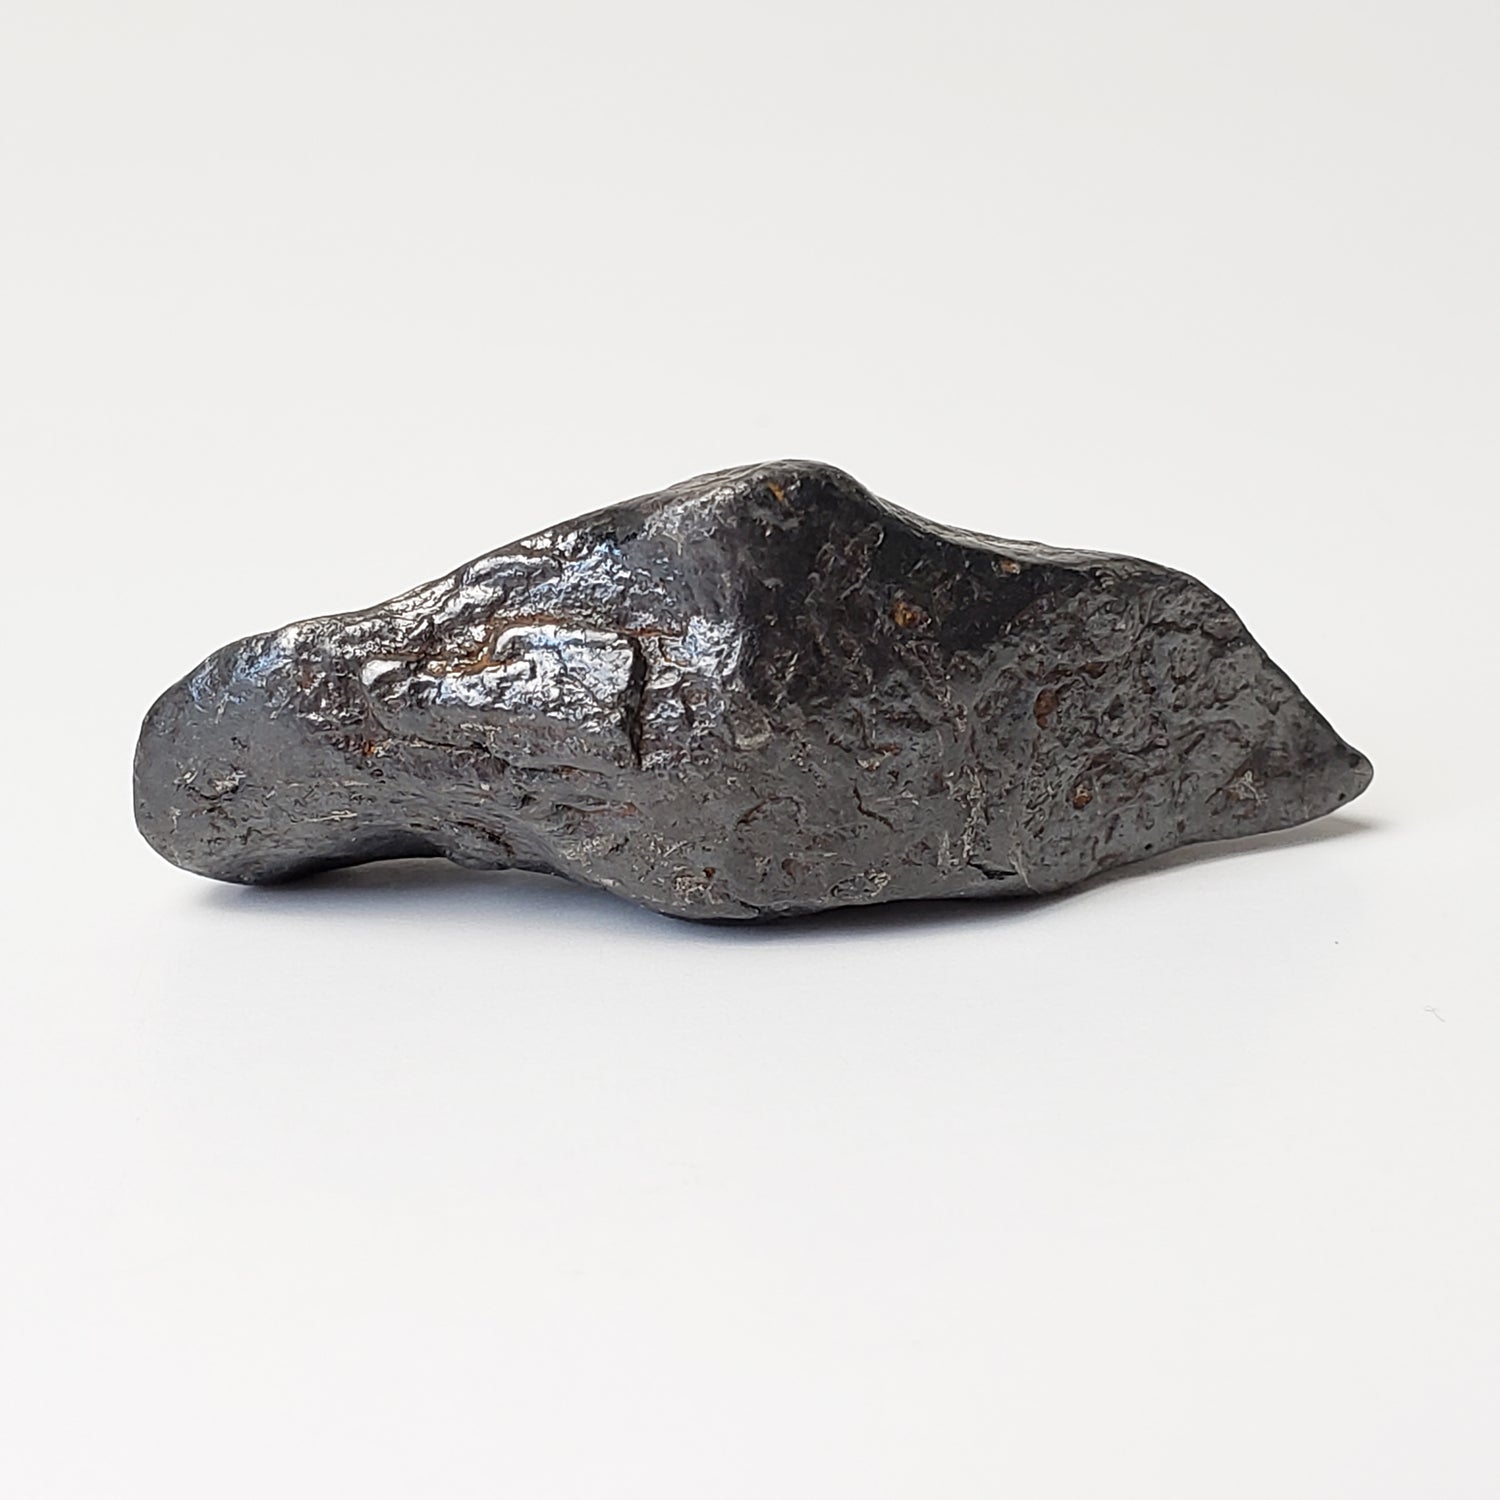 Canyon Diablo Meteorite | 40.5 Grams | Individual | Iron IAB-MG | Arizona U.S.A. | Canagem.com